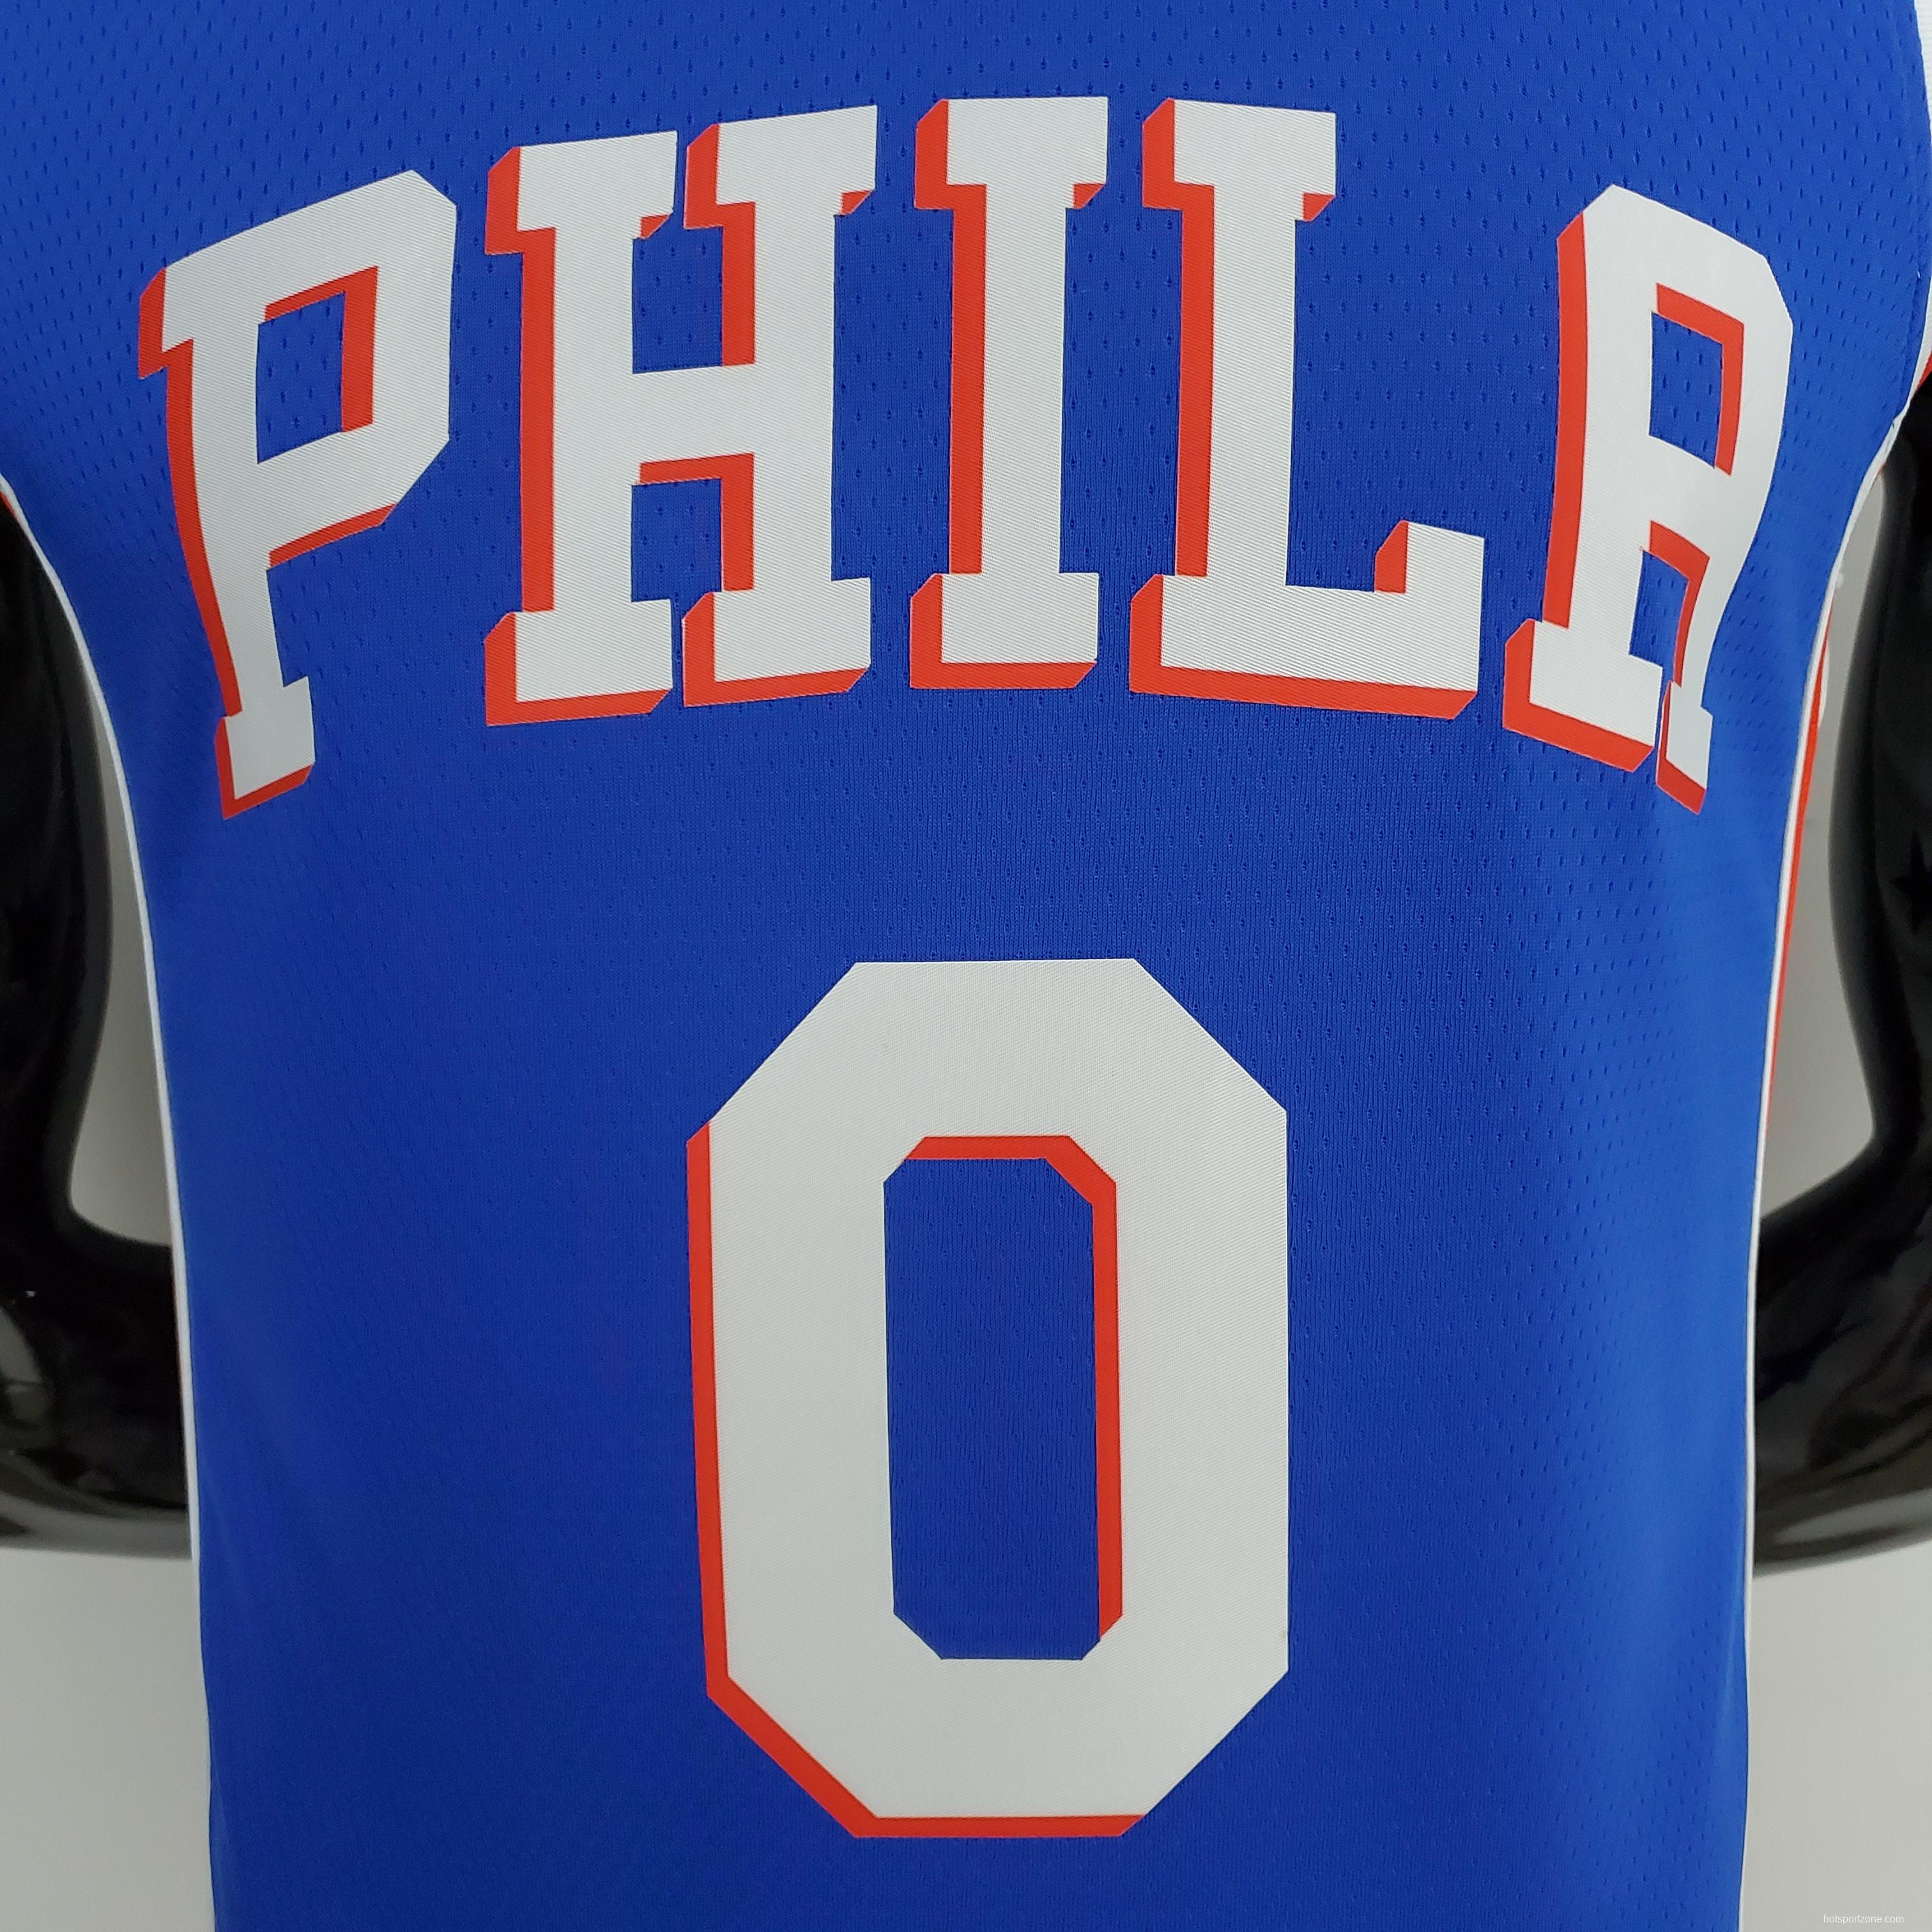 75th Anniversary Philadelphia 76ers MAXEY#0 Blue NBA Jersey